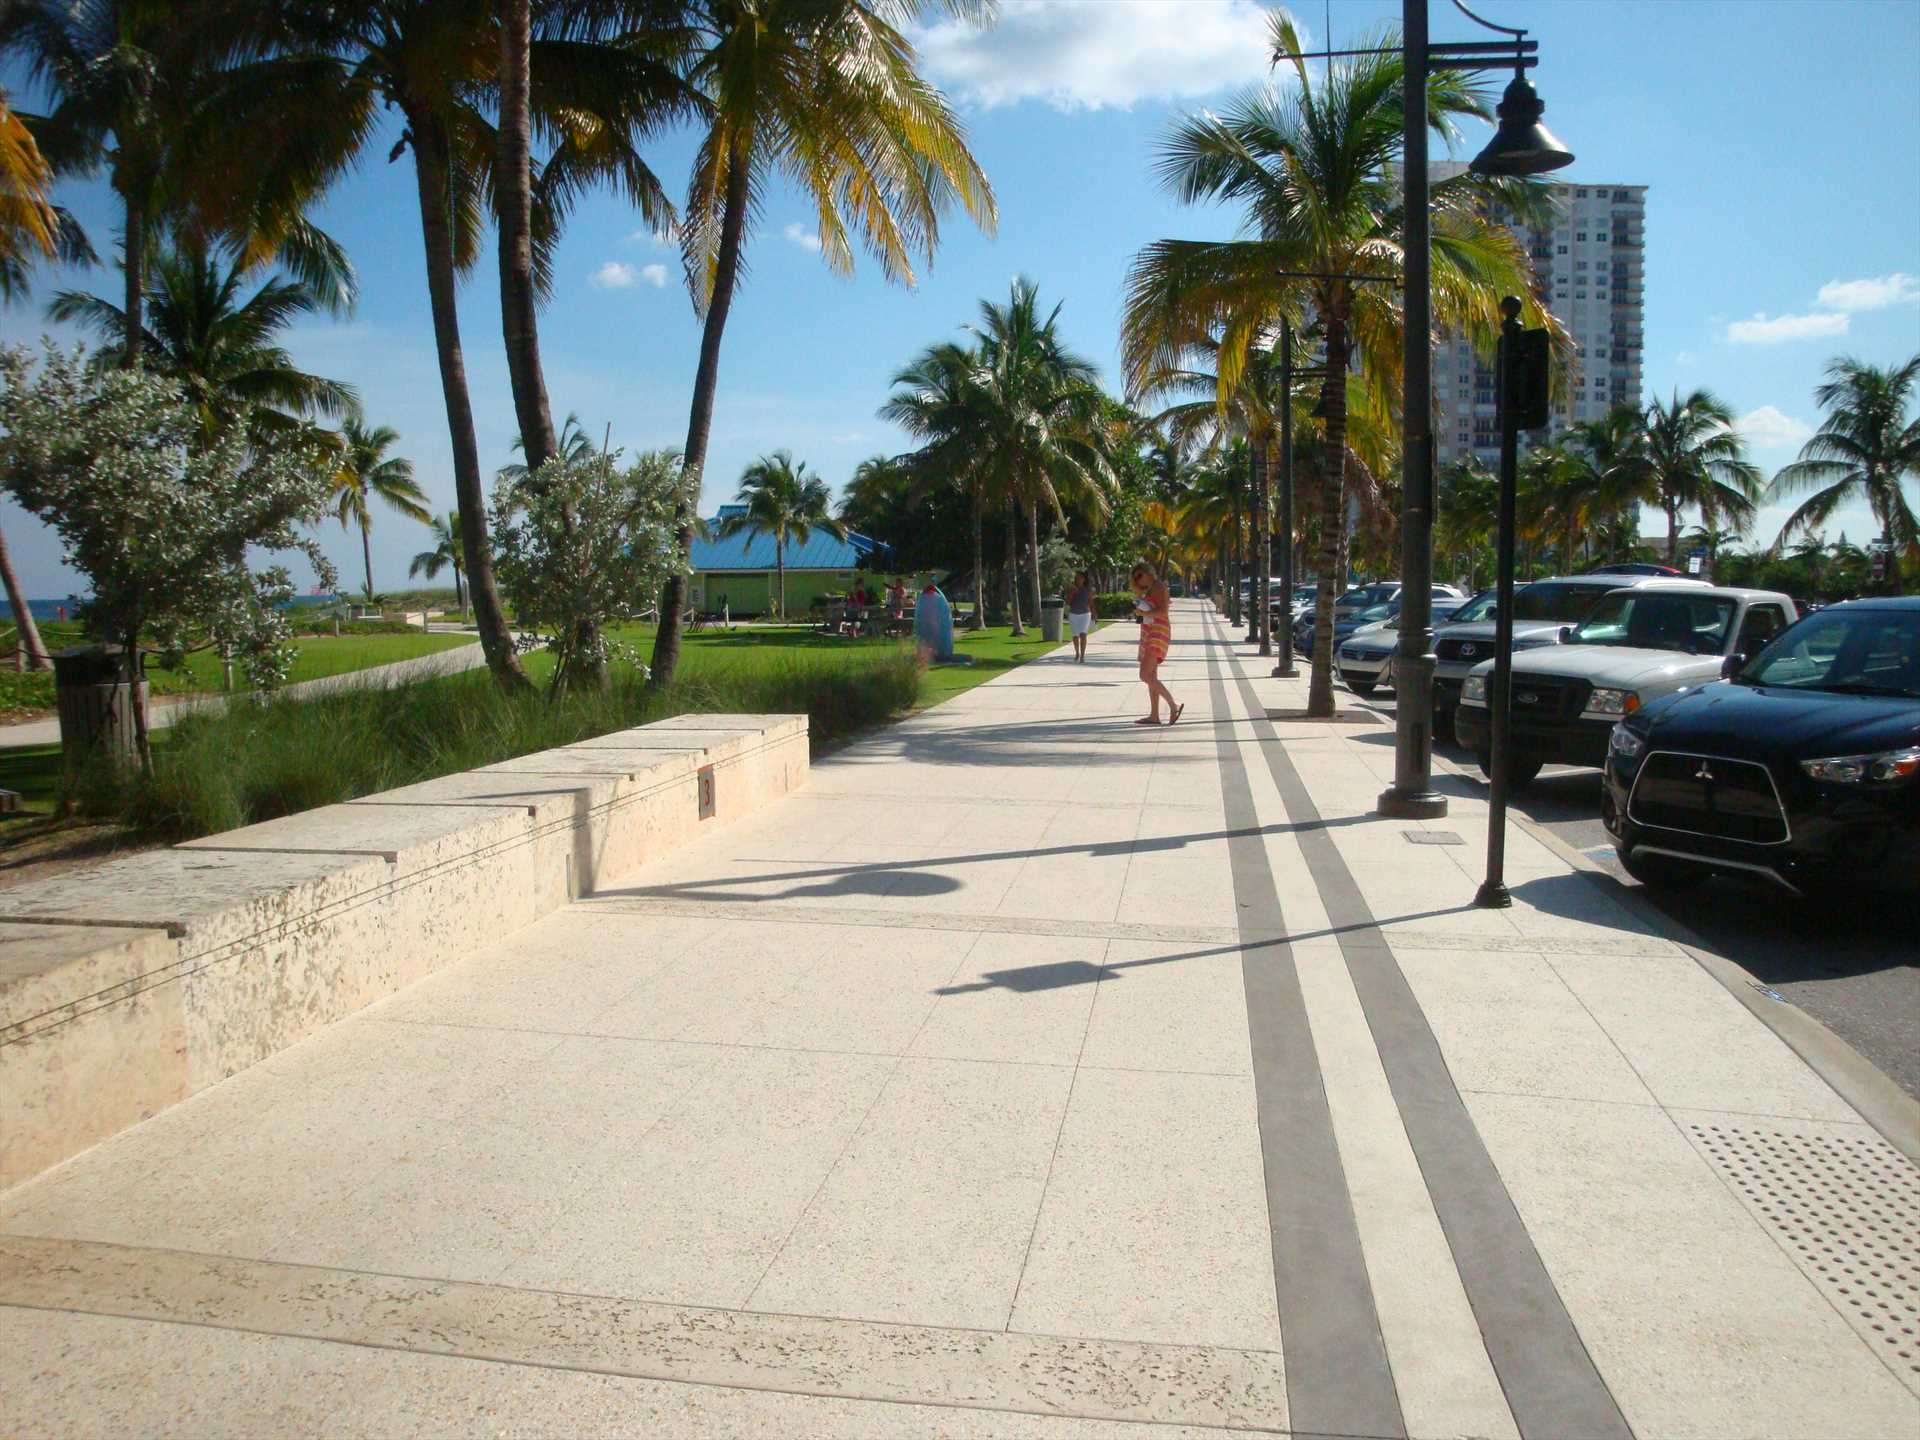 Stroll along the new beachfront boardwalk.